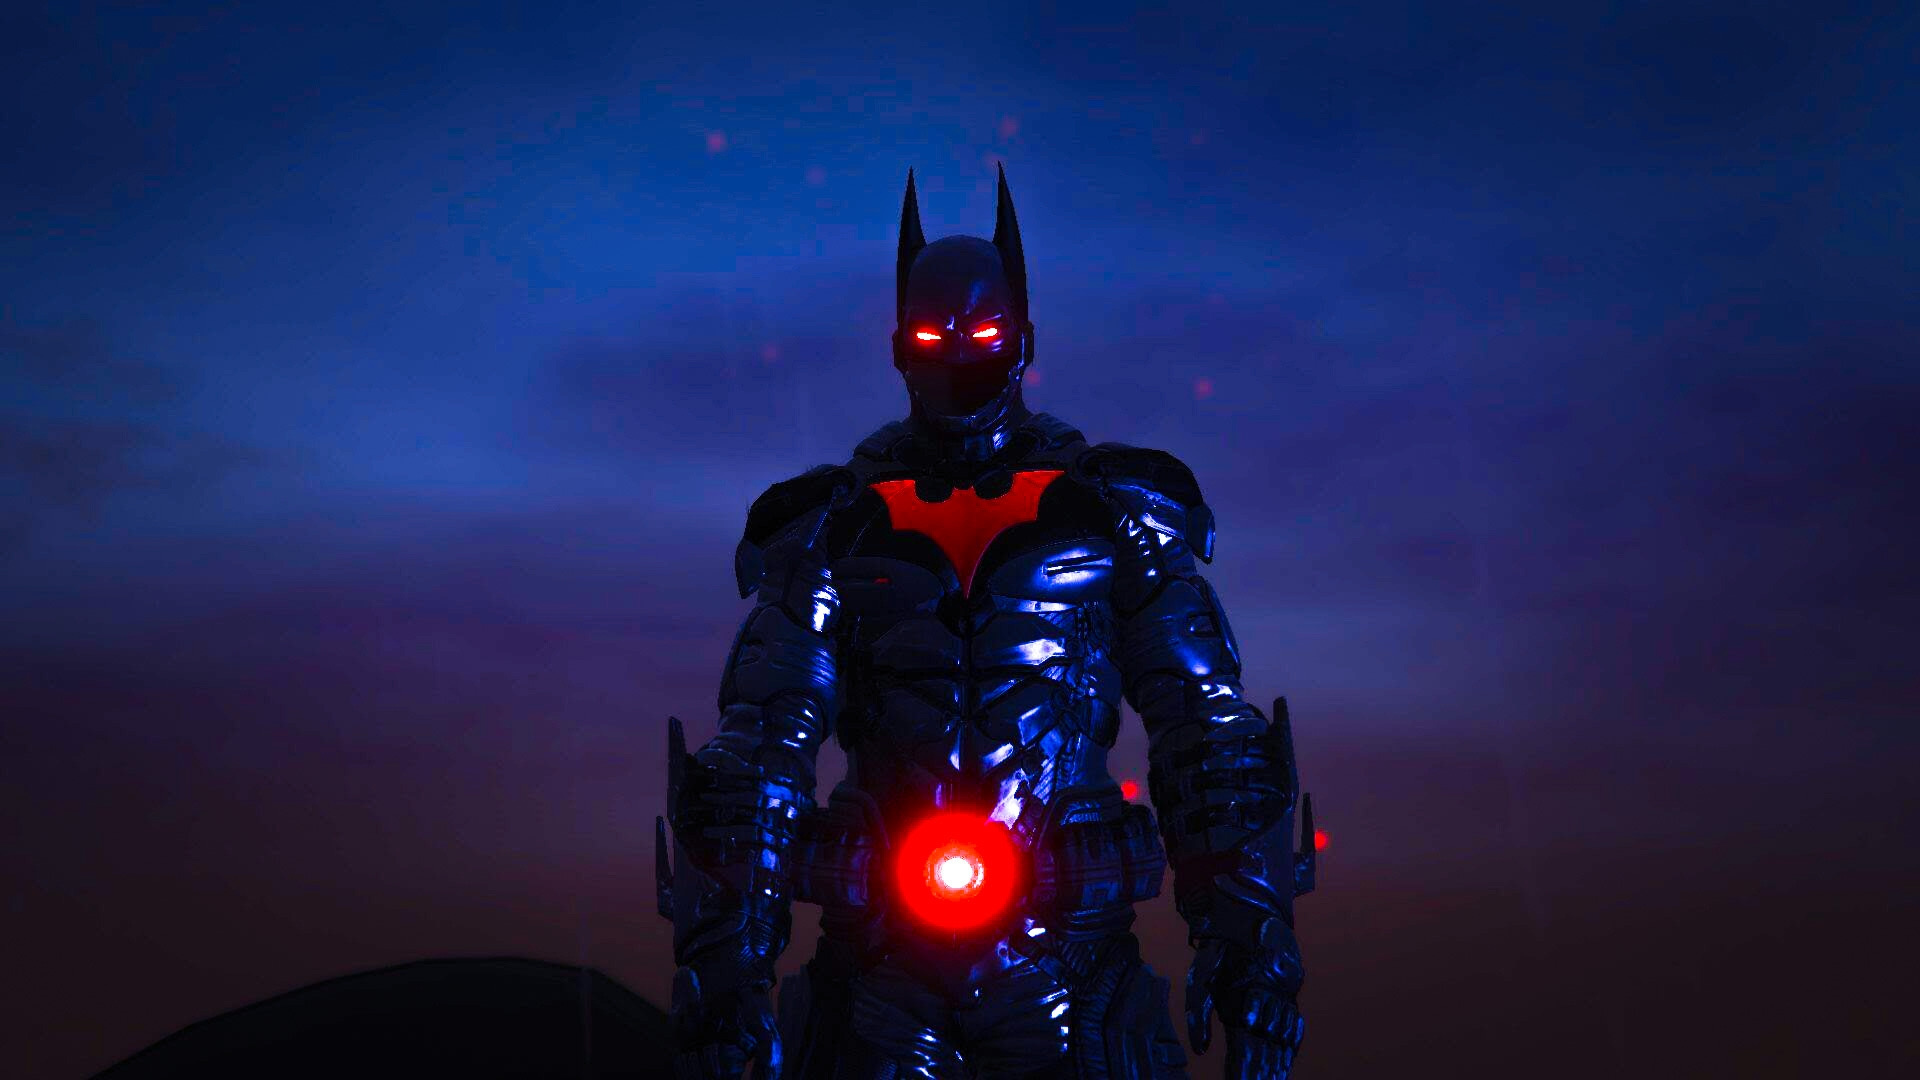 Animated Batman Beyond mod for Batman Arkham City by